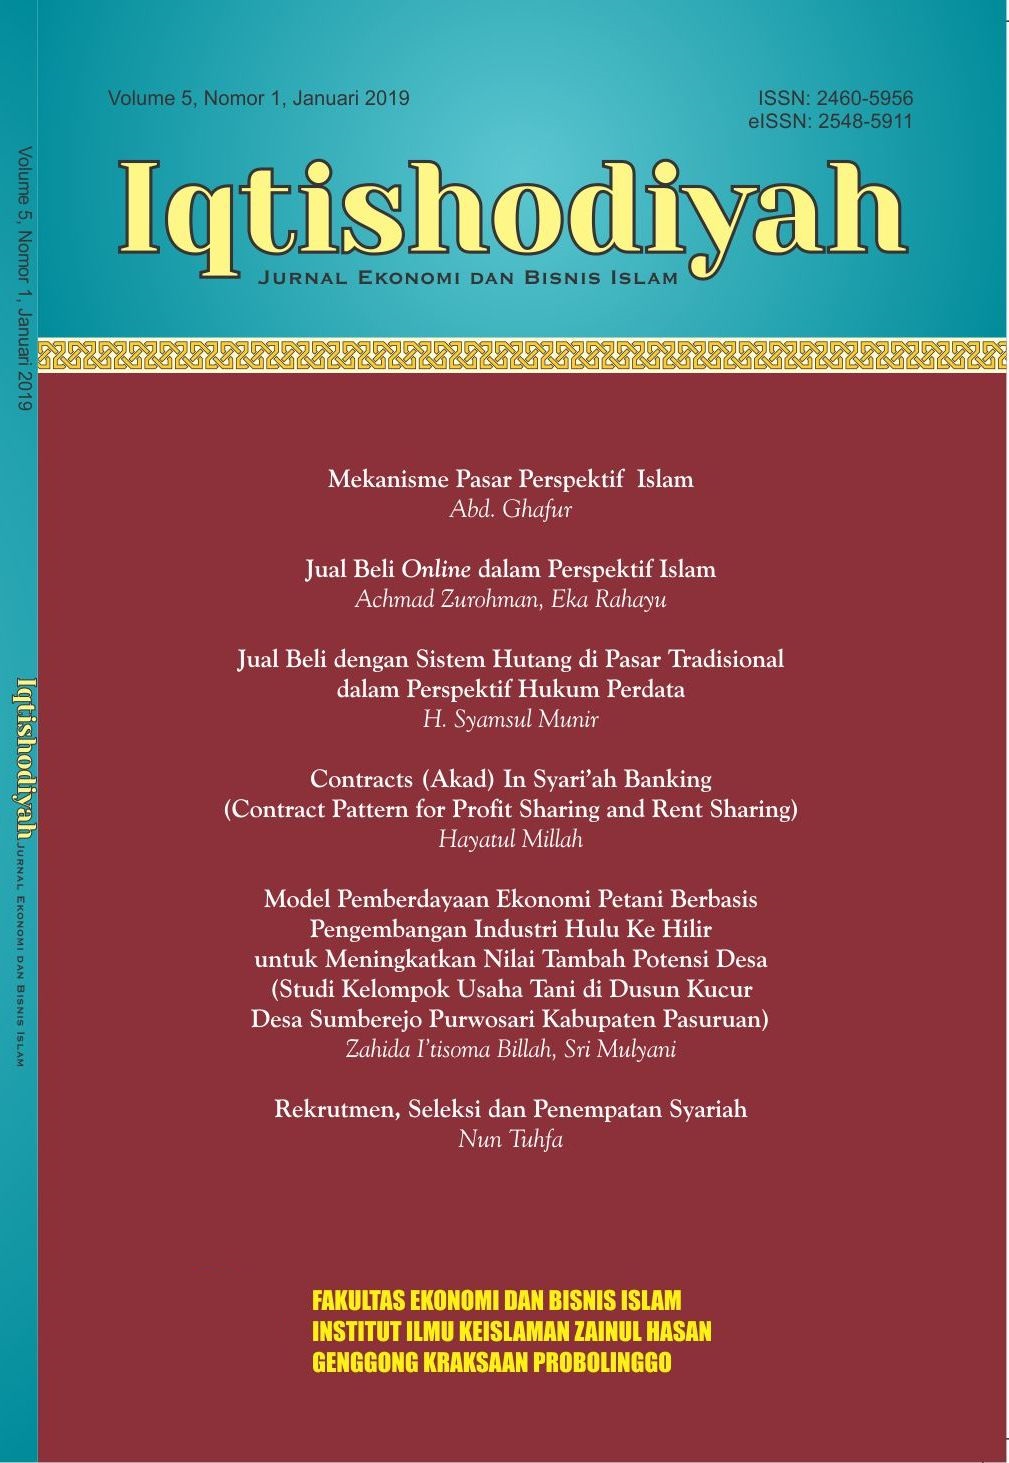 Archives | Iqtishodiyah : Jurnal Ekonomi dan Bisnis Islam